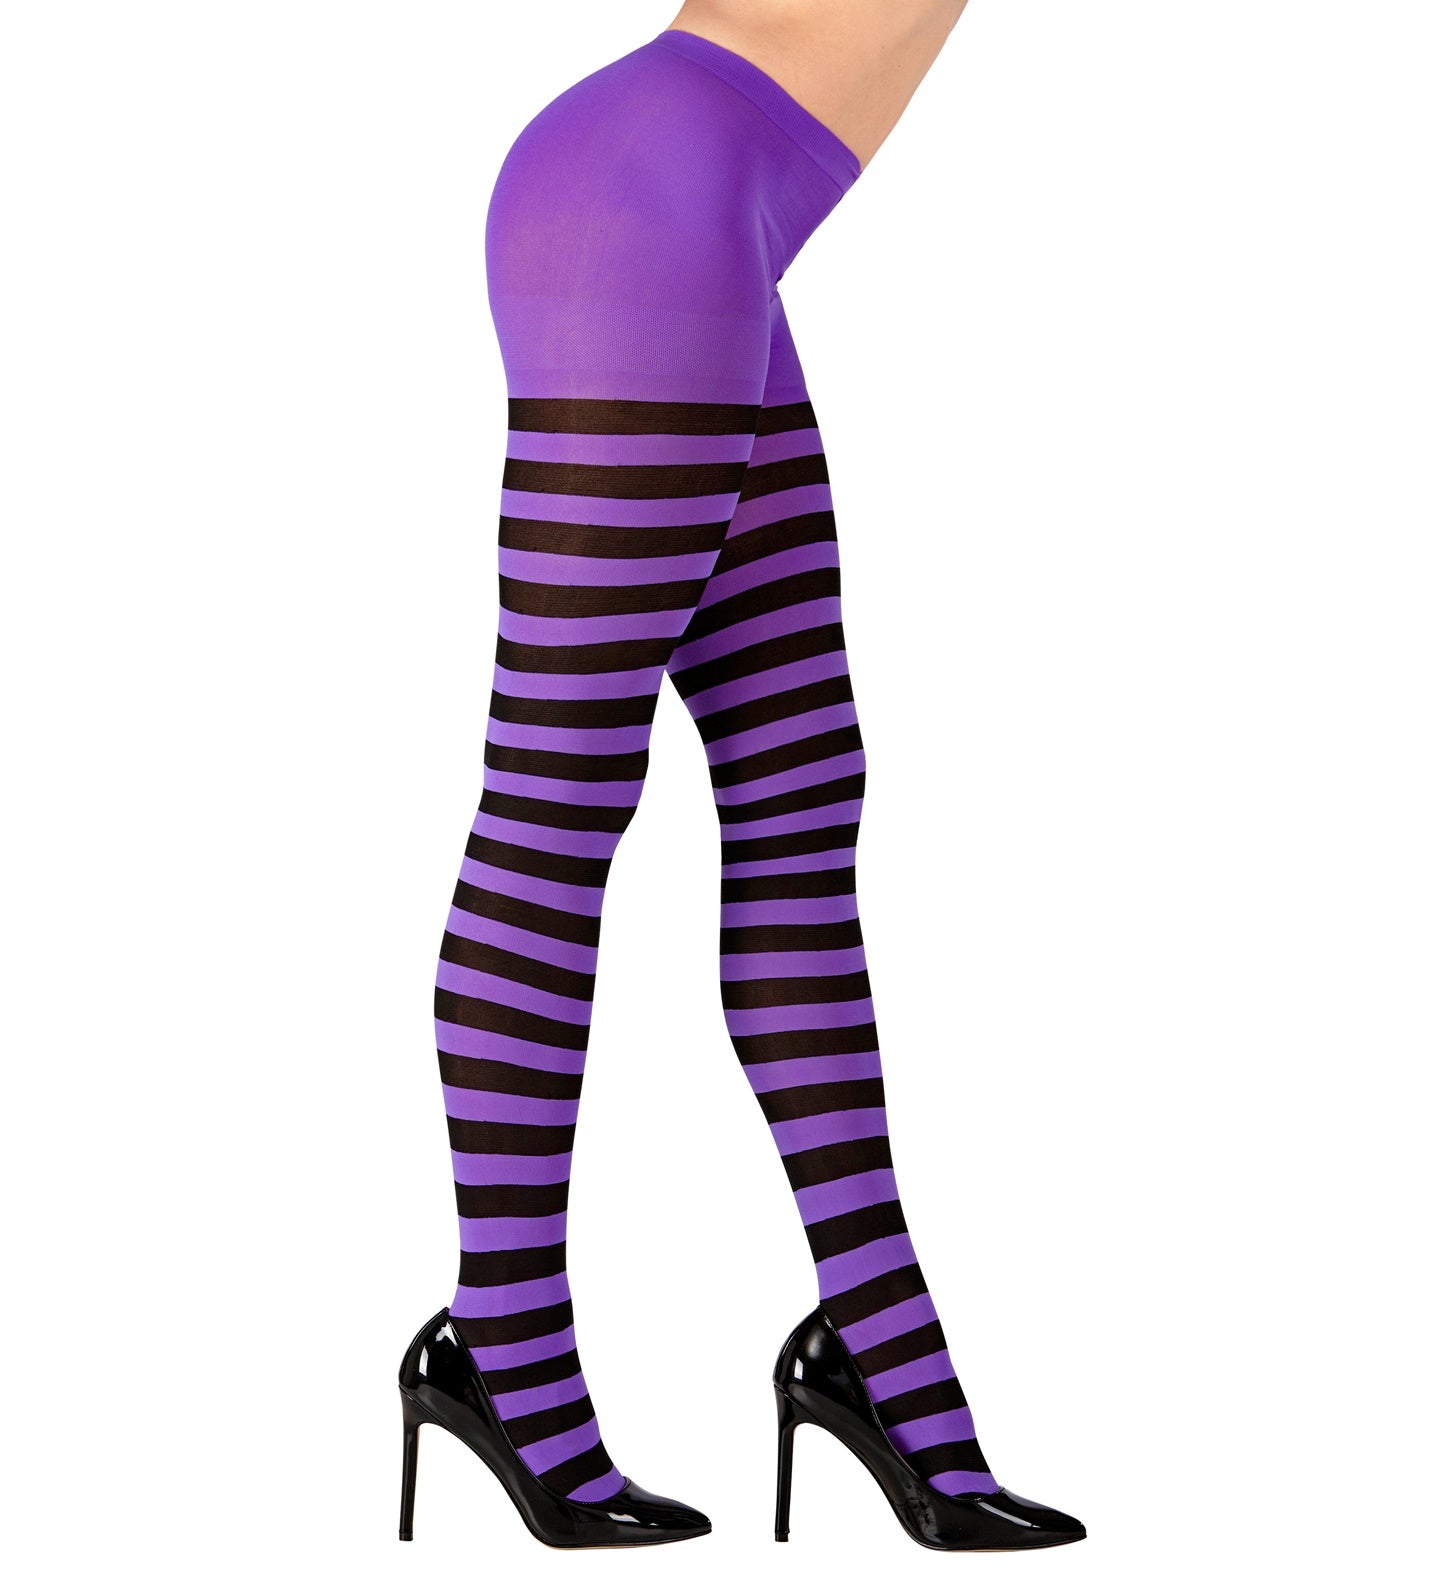 Purple and Black Striped stockings